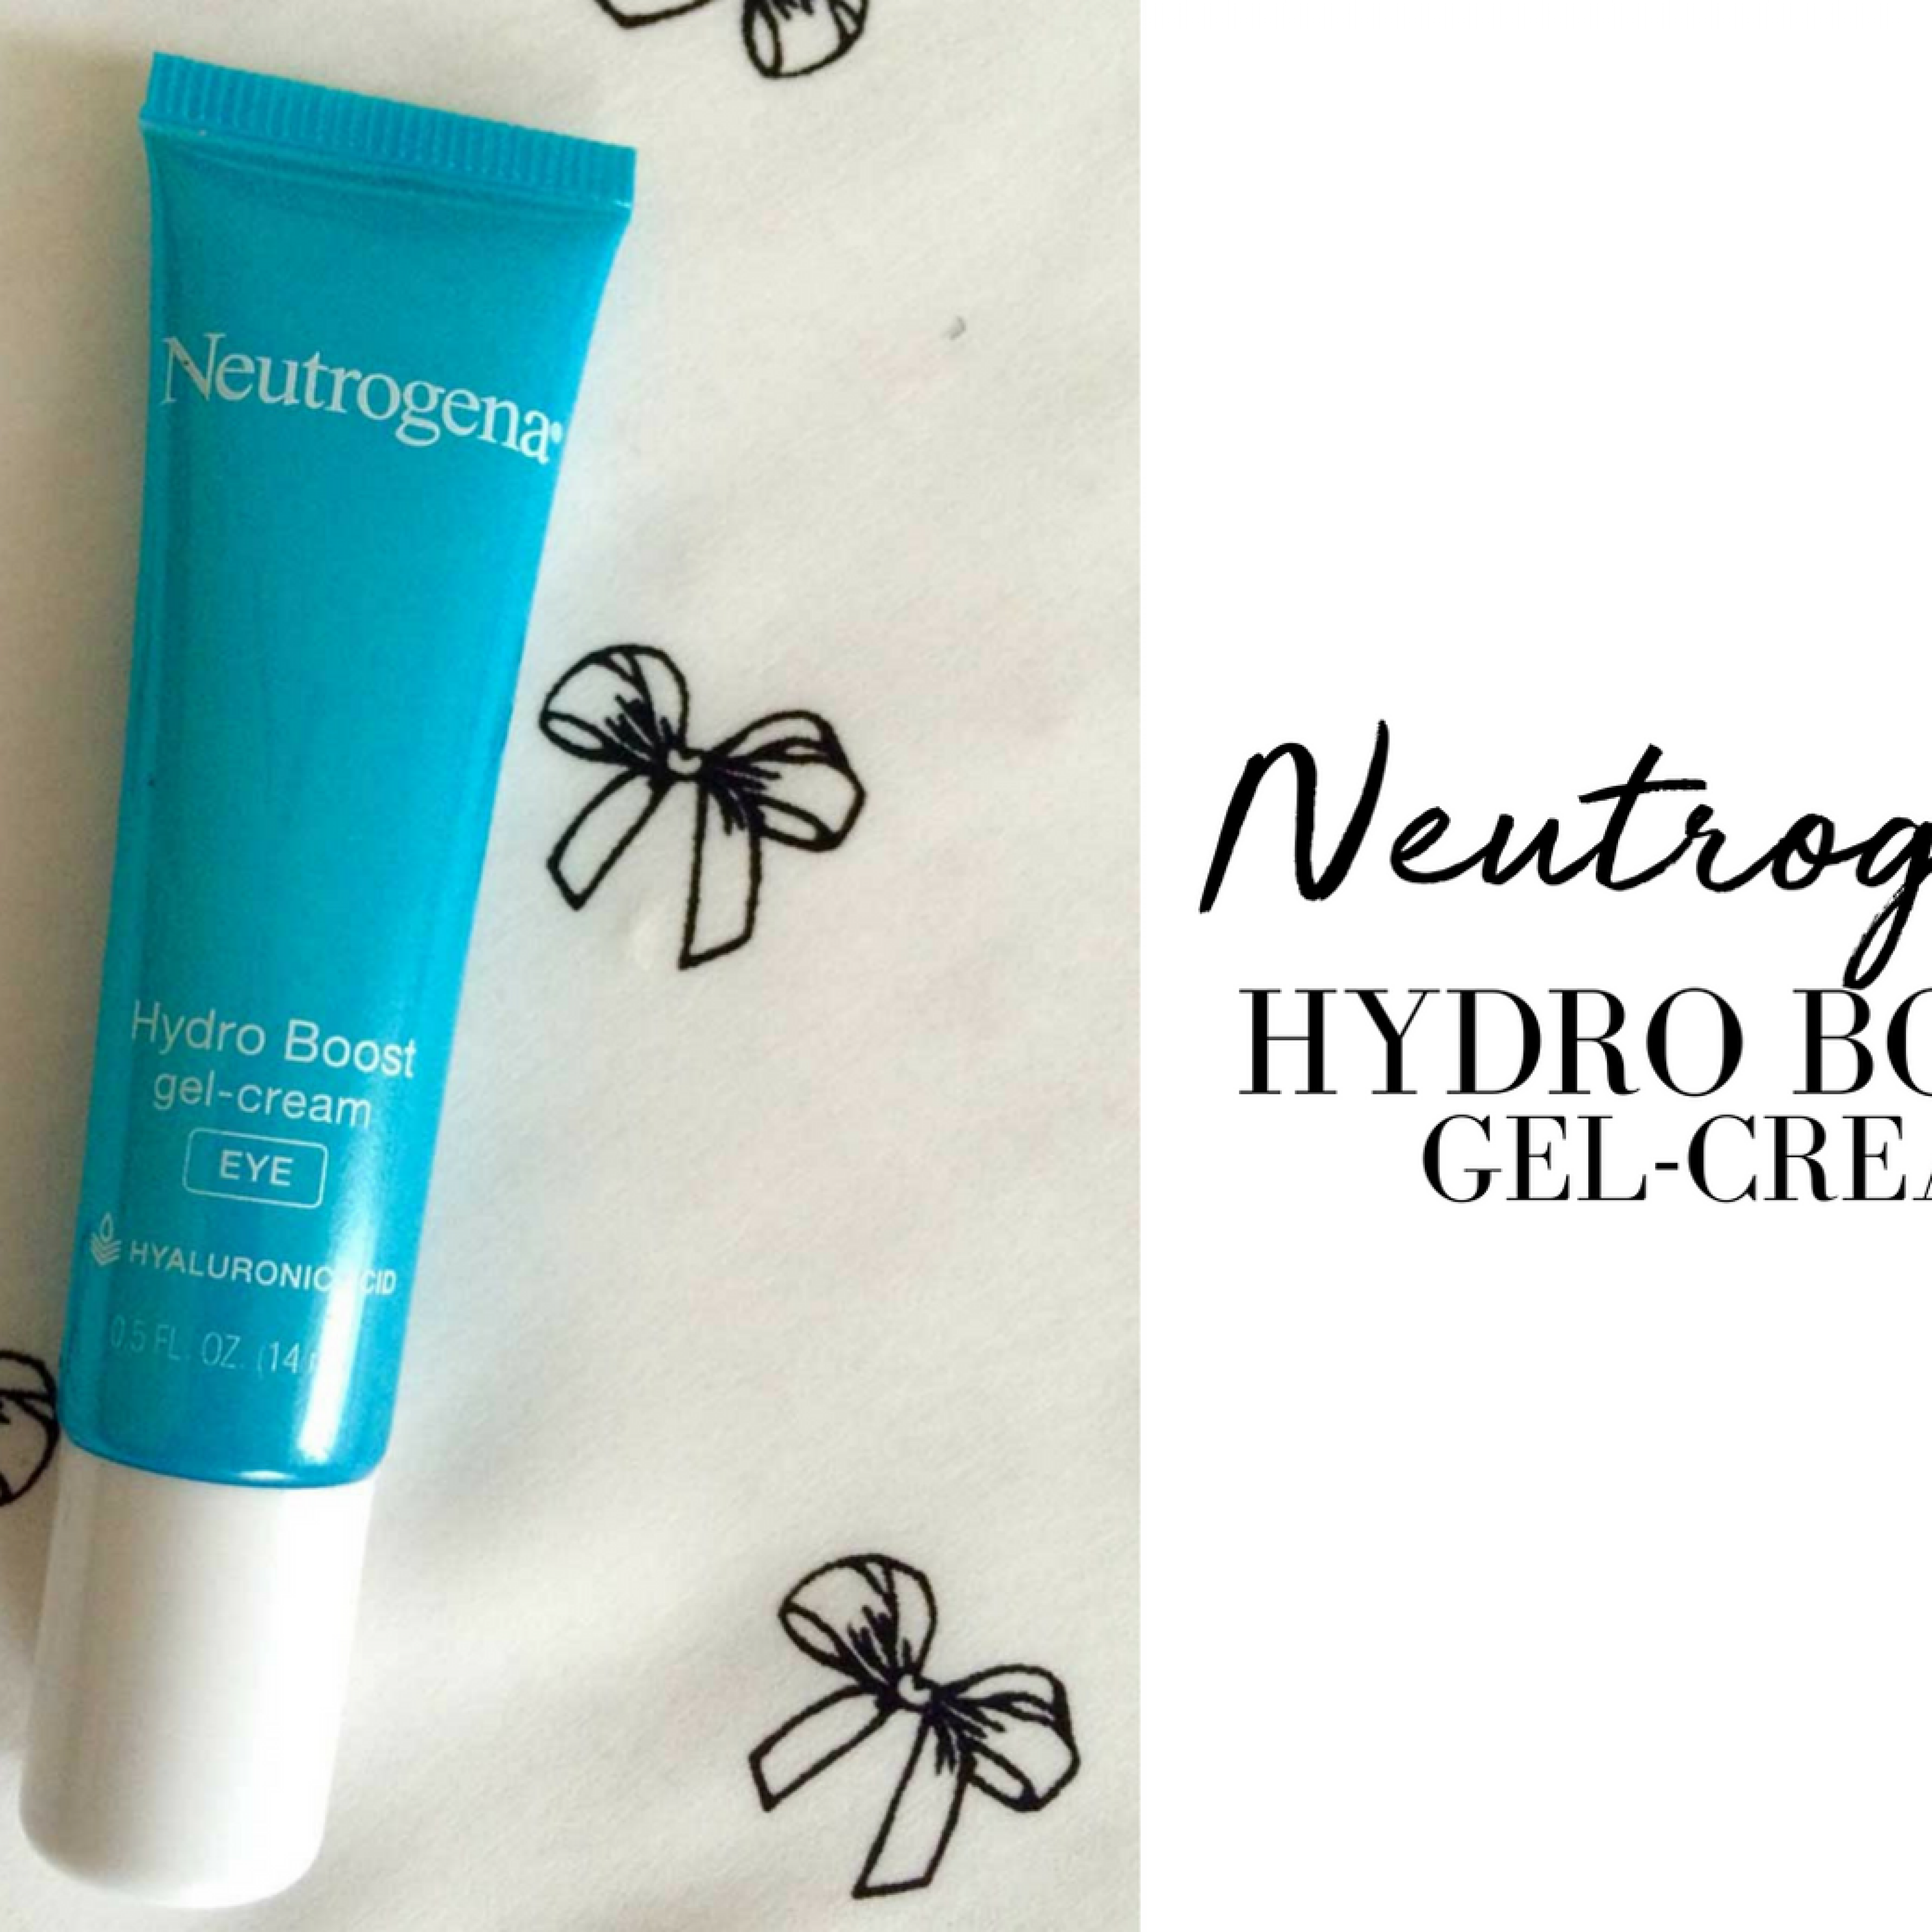 Neutrogena Hydro Boost Eye Gel-Cream Review